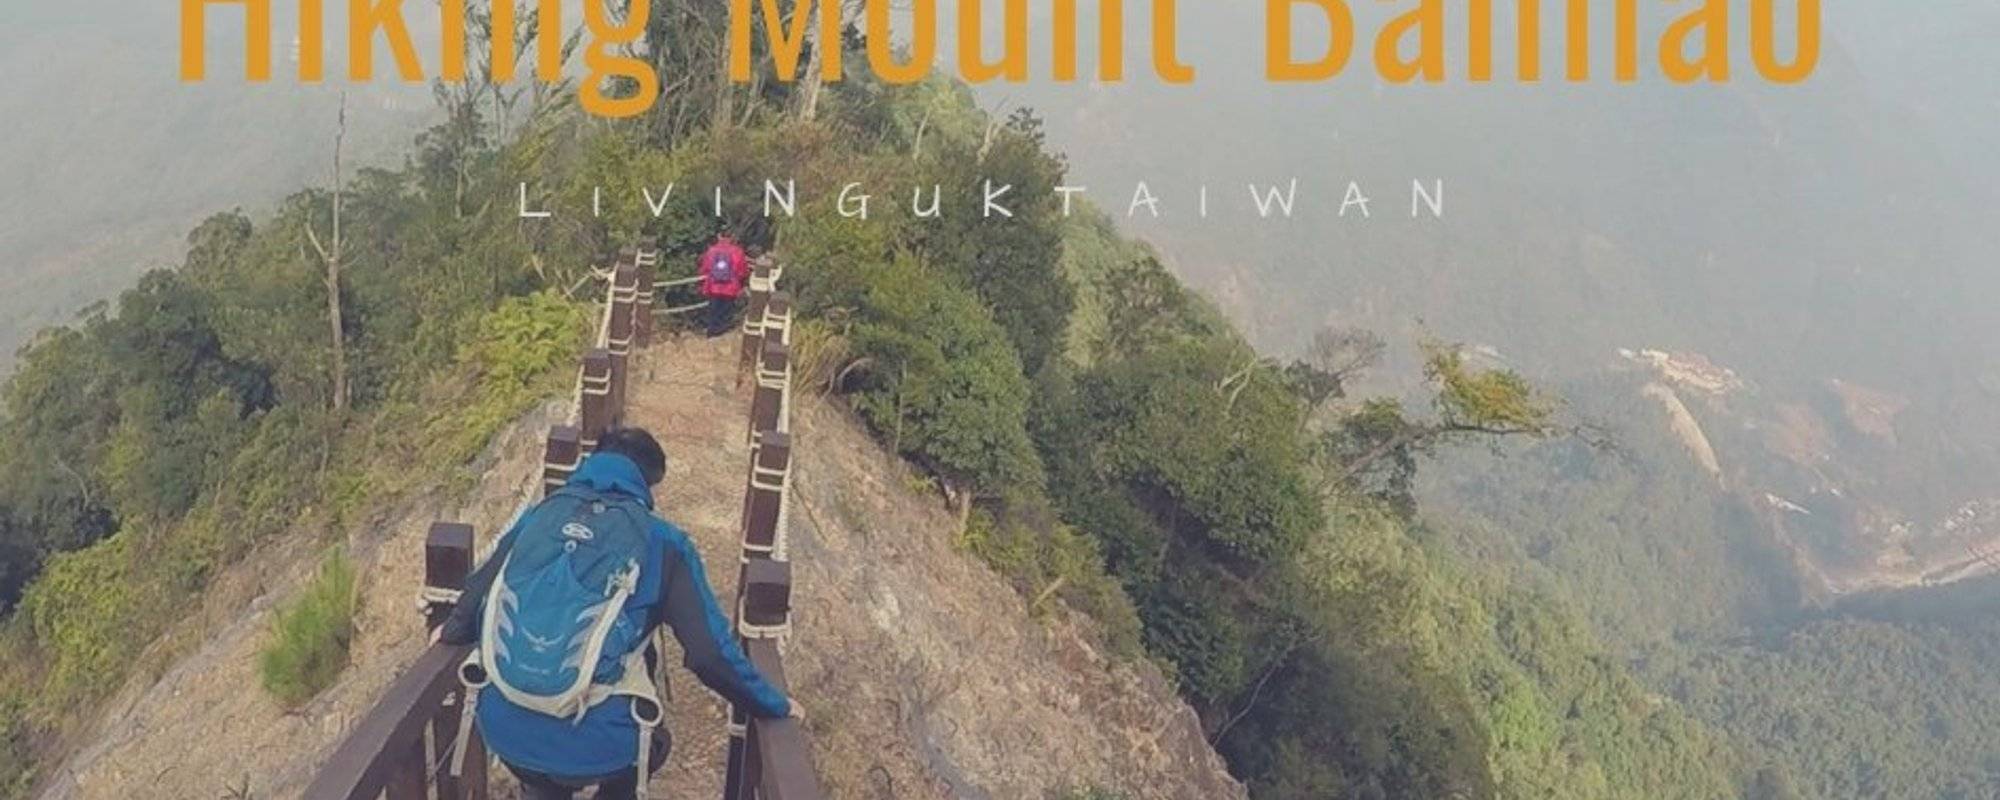 Hiking at Mount Baimao in Taiwan 谷關七雄之白毛山